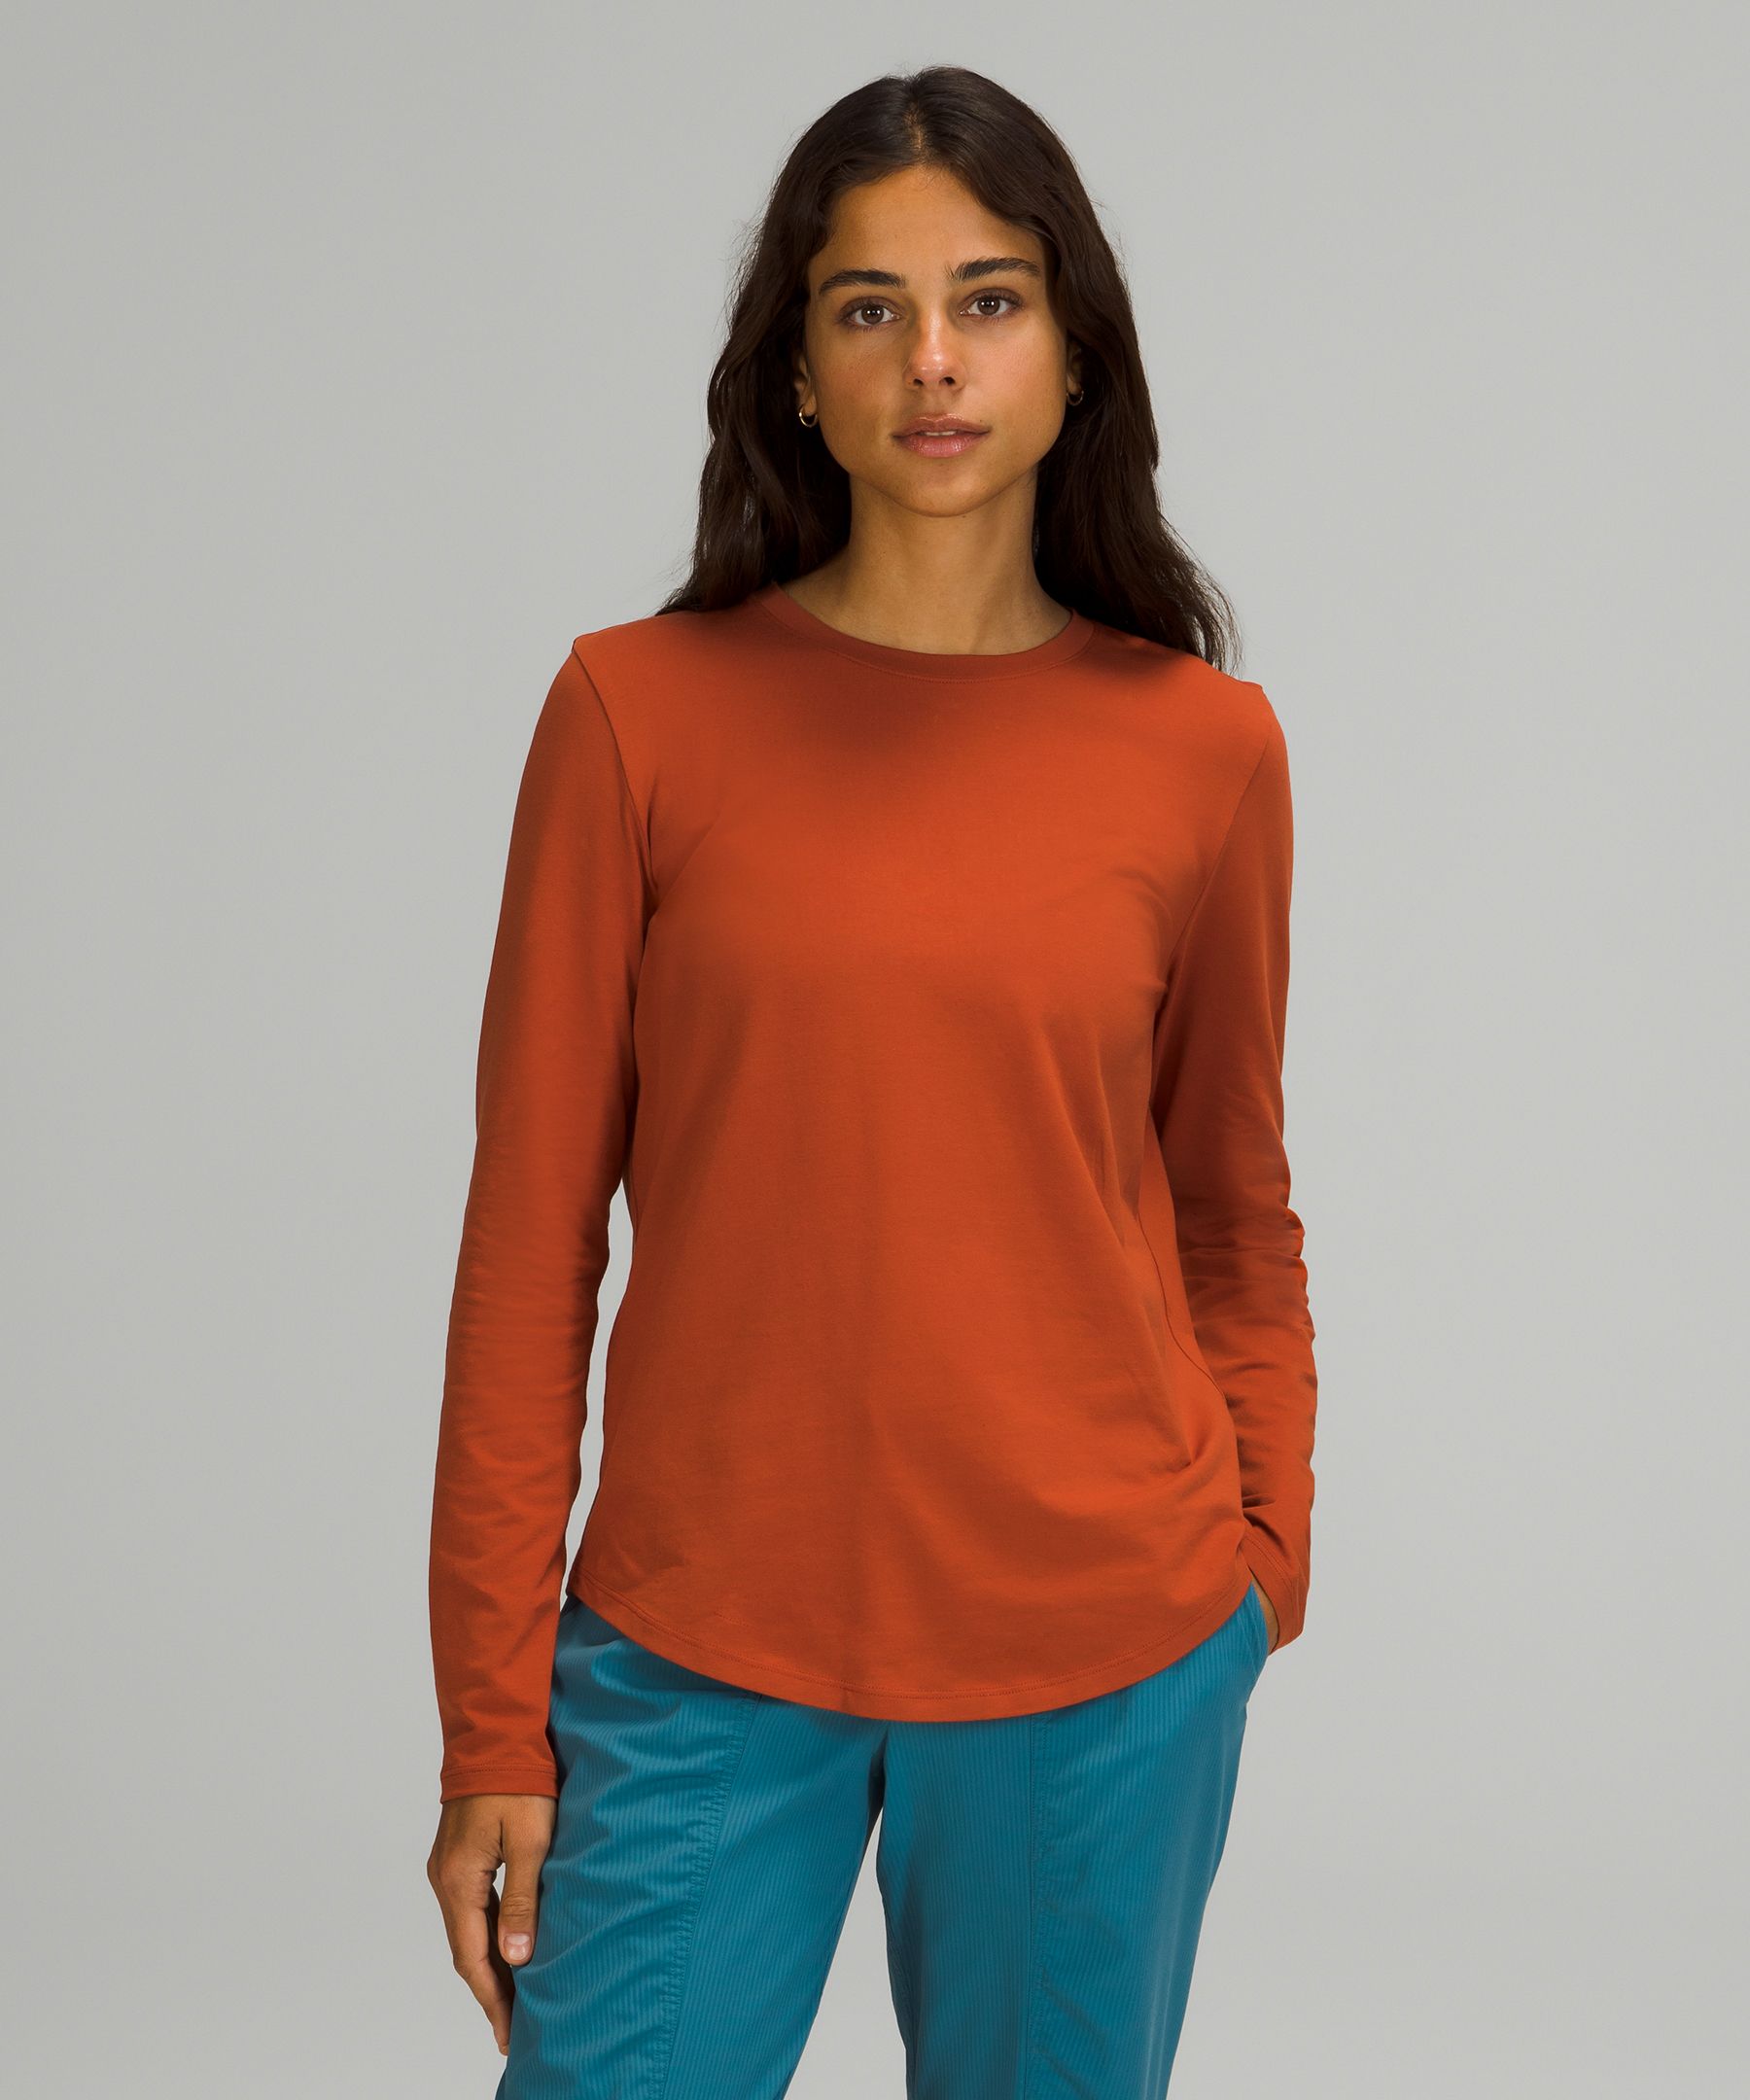 Lululemon Love Long Sleeve Shirt In Orange